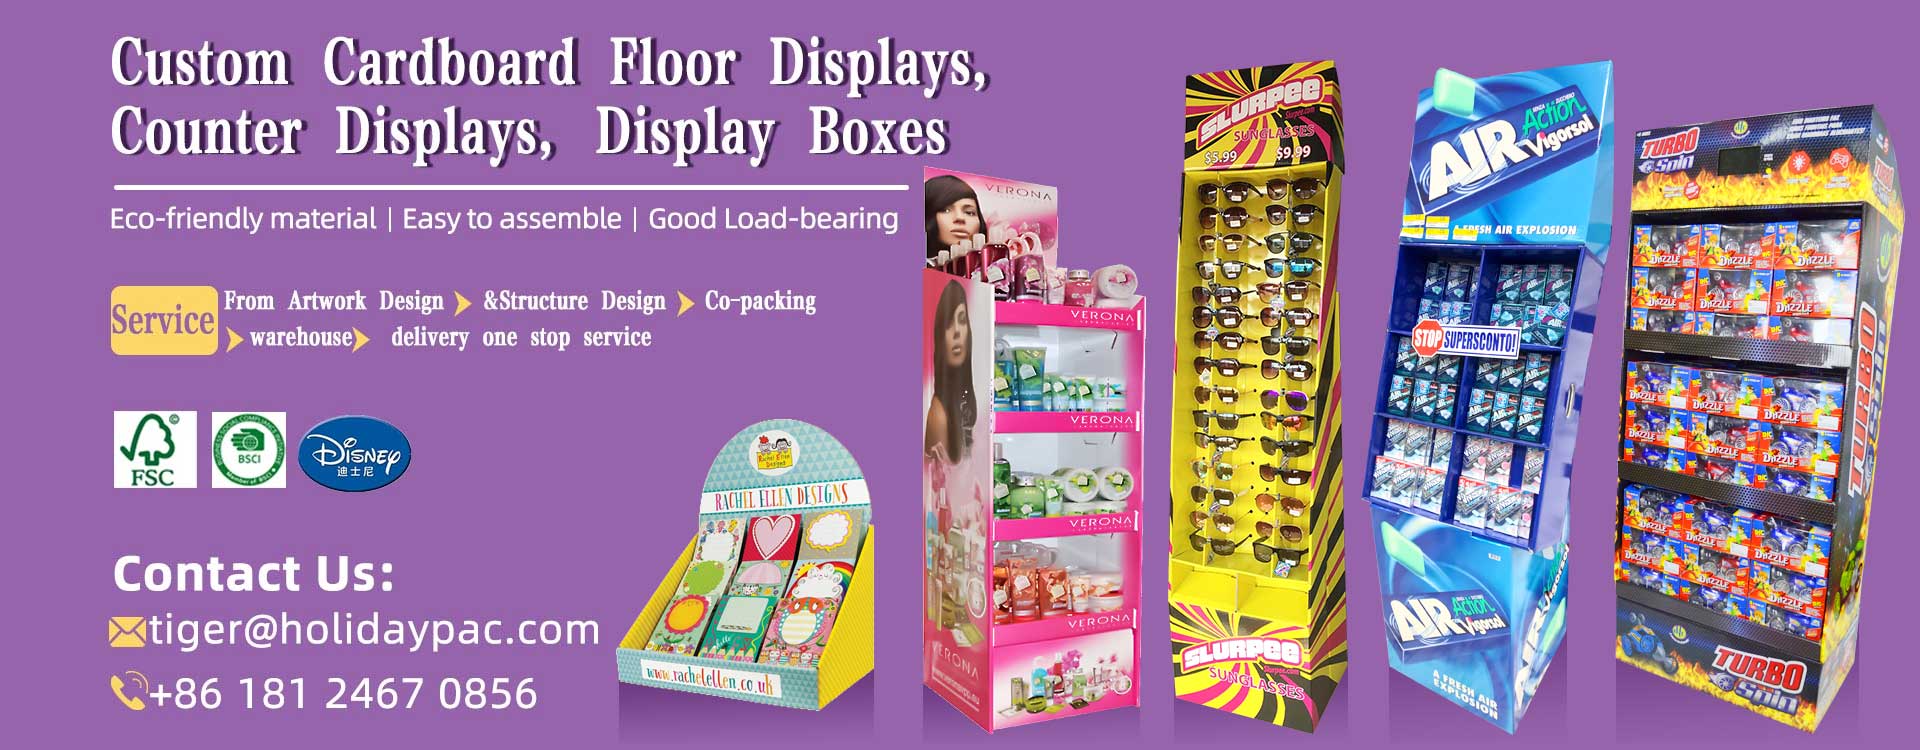 Cardboard Floor Displays Custom Displays Display Boxes Counter